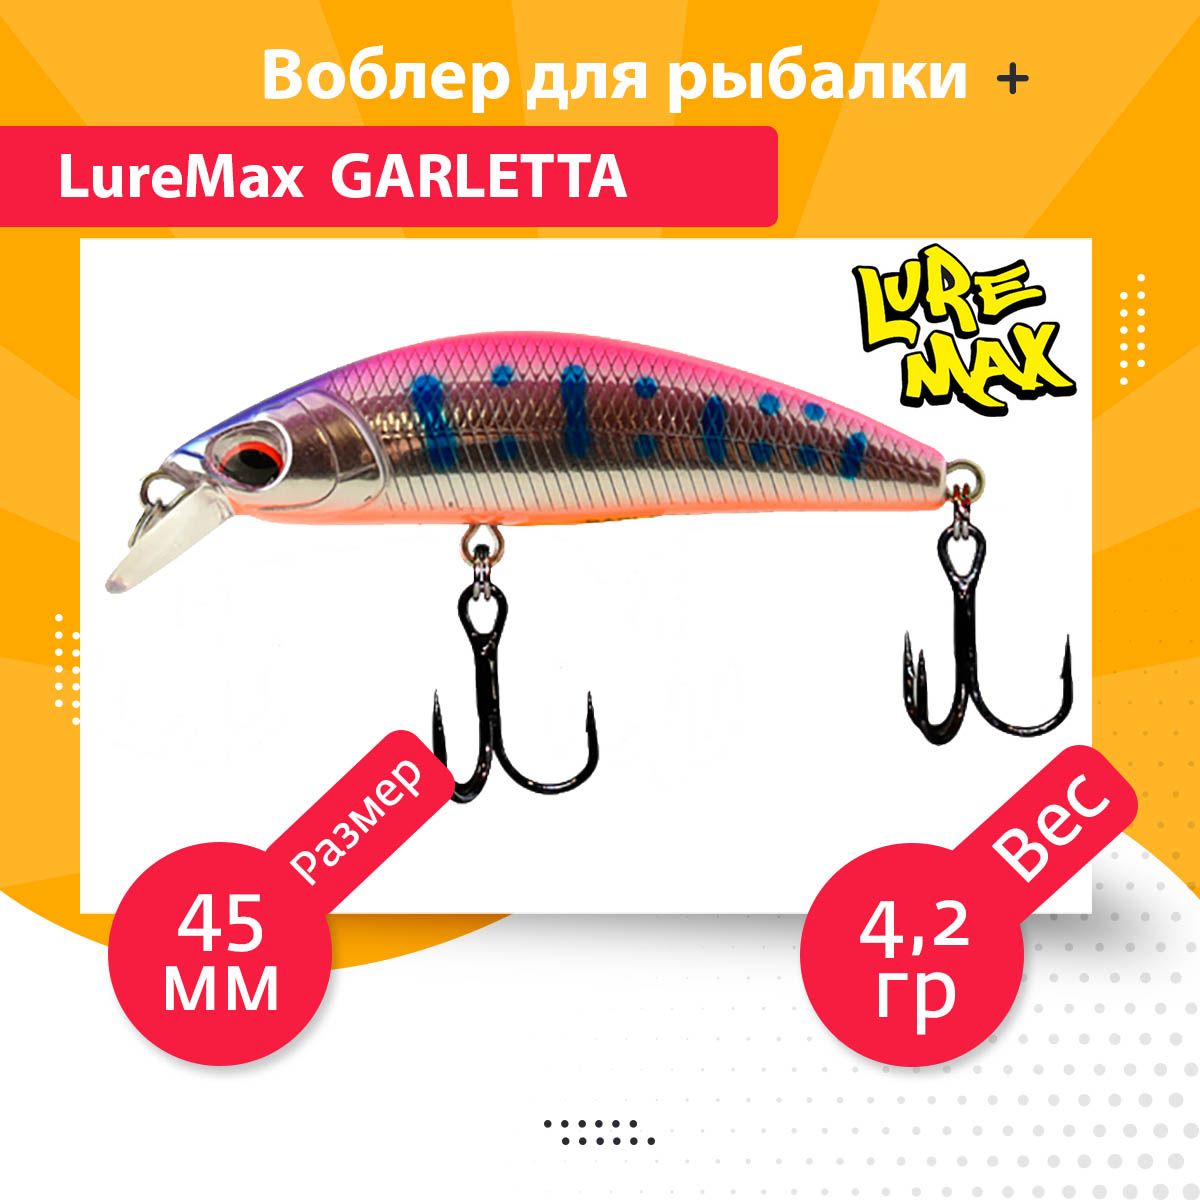 Воблер для рыбалки LureMax GARLETTA LWG45S-176